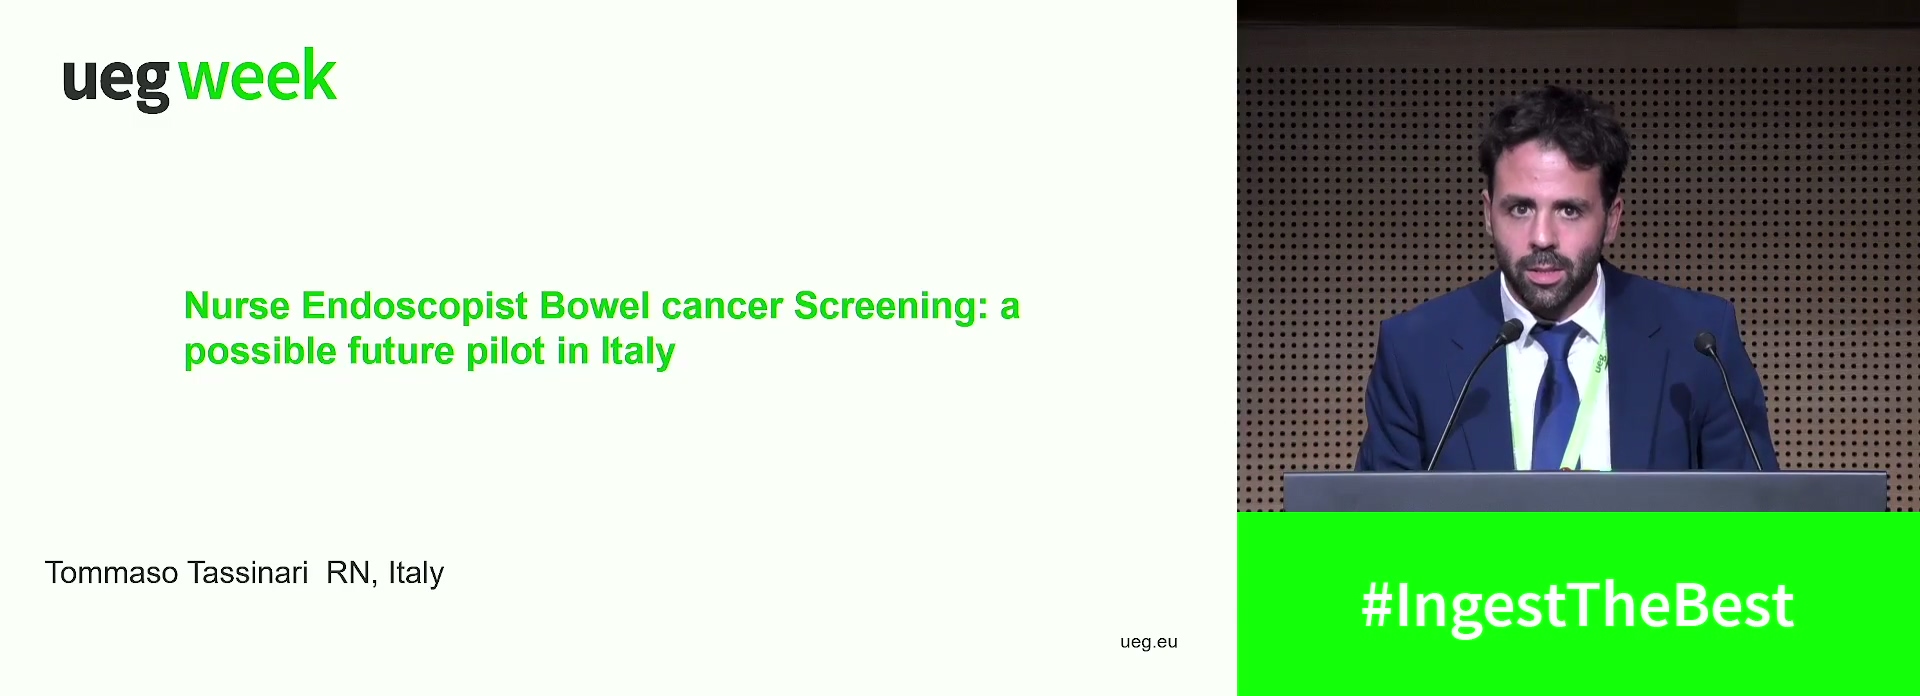 Nurse endoscopist bowel cancer screening: A possible future pilot in Italy